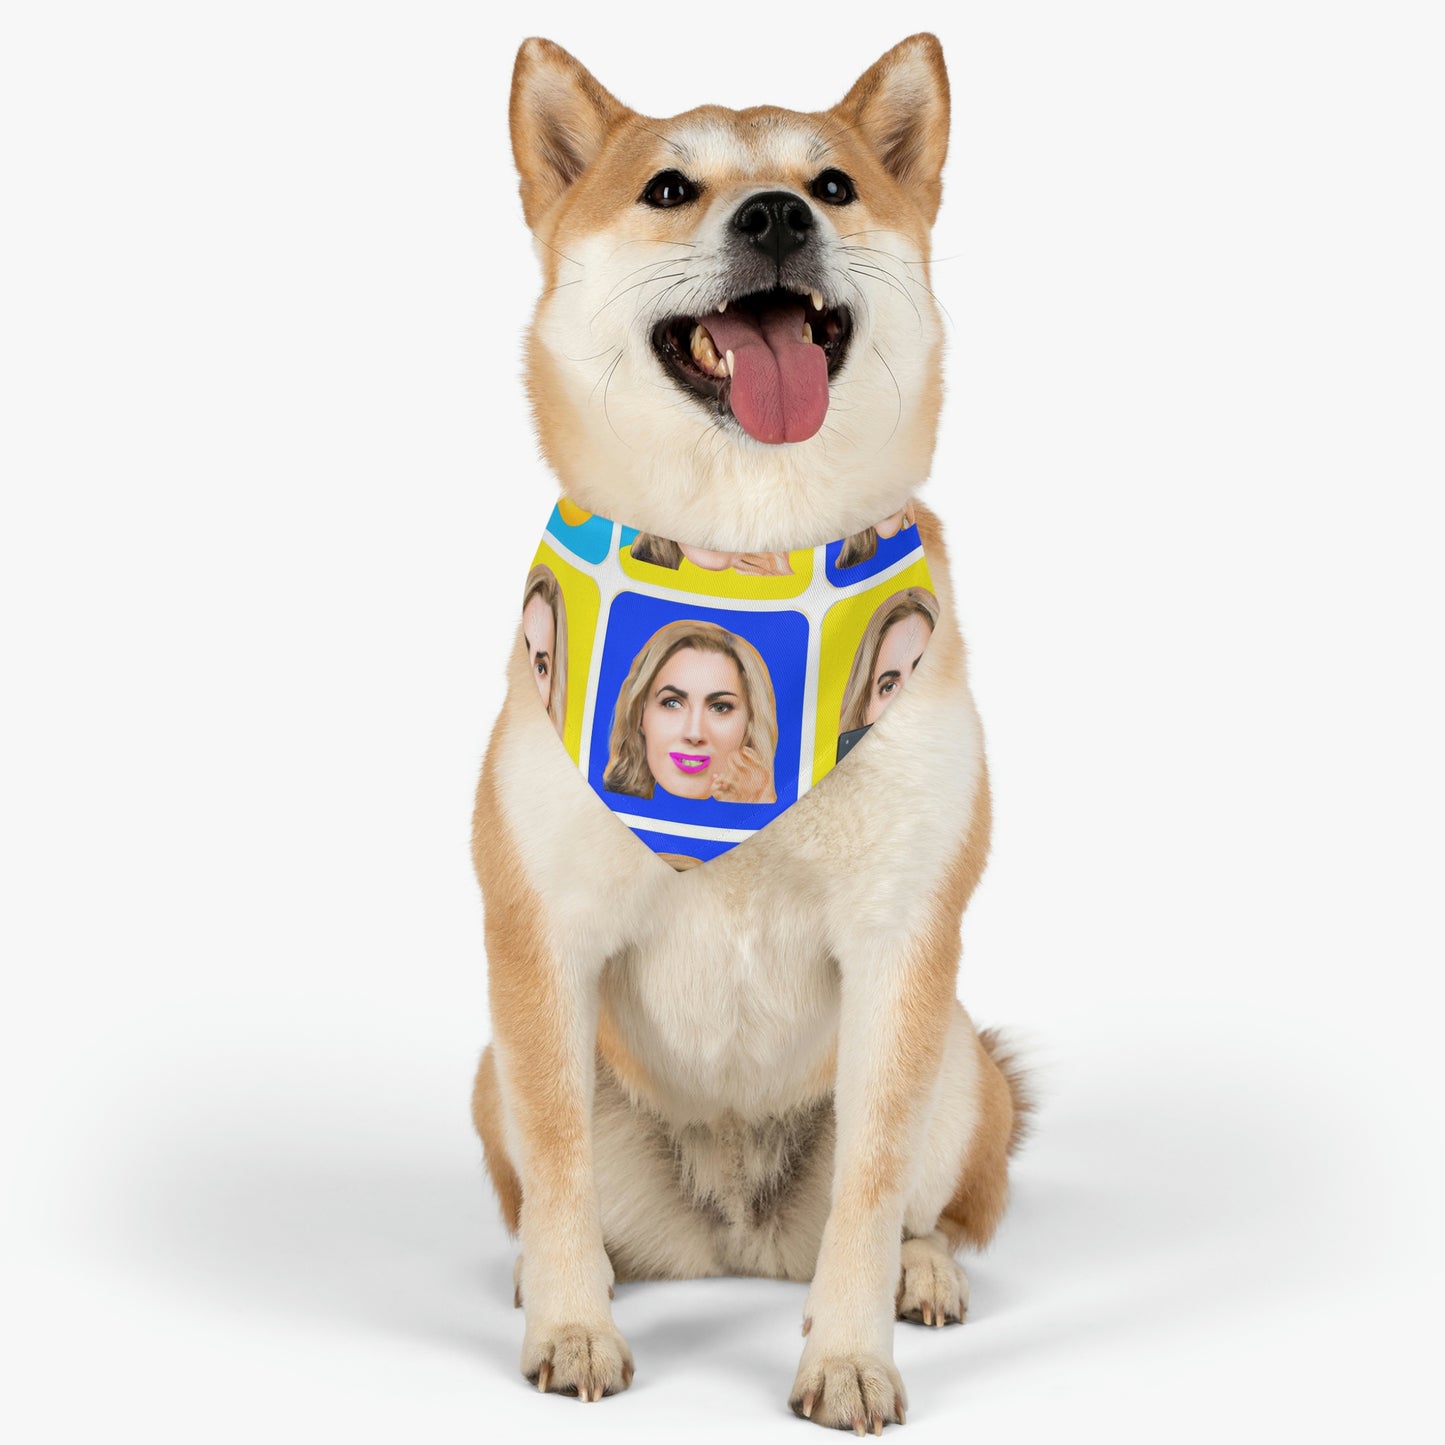 "Emoji-zing a Celebrity: A Pop Art Portrait" - The Alien Pet Bandana Collar